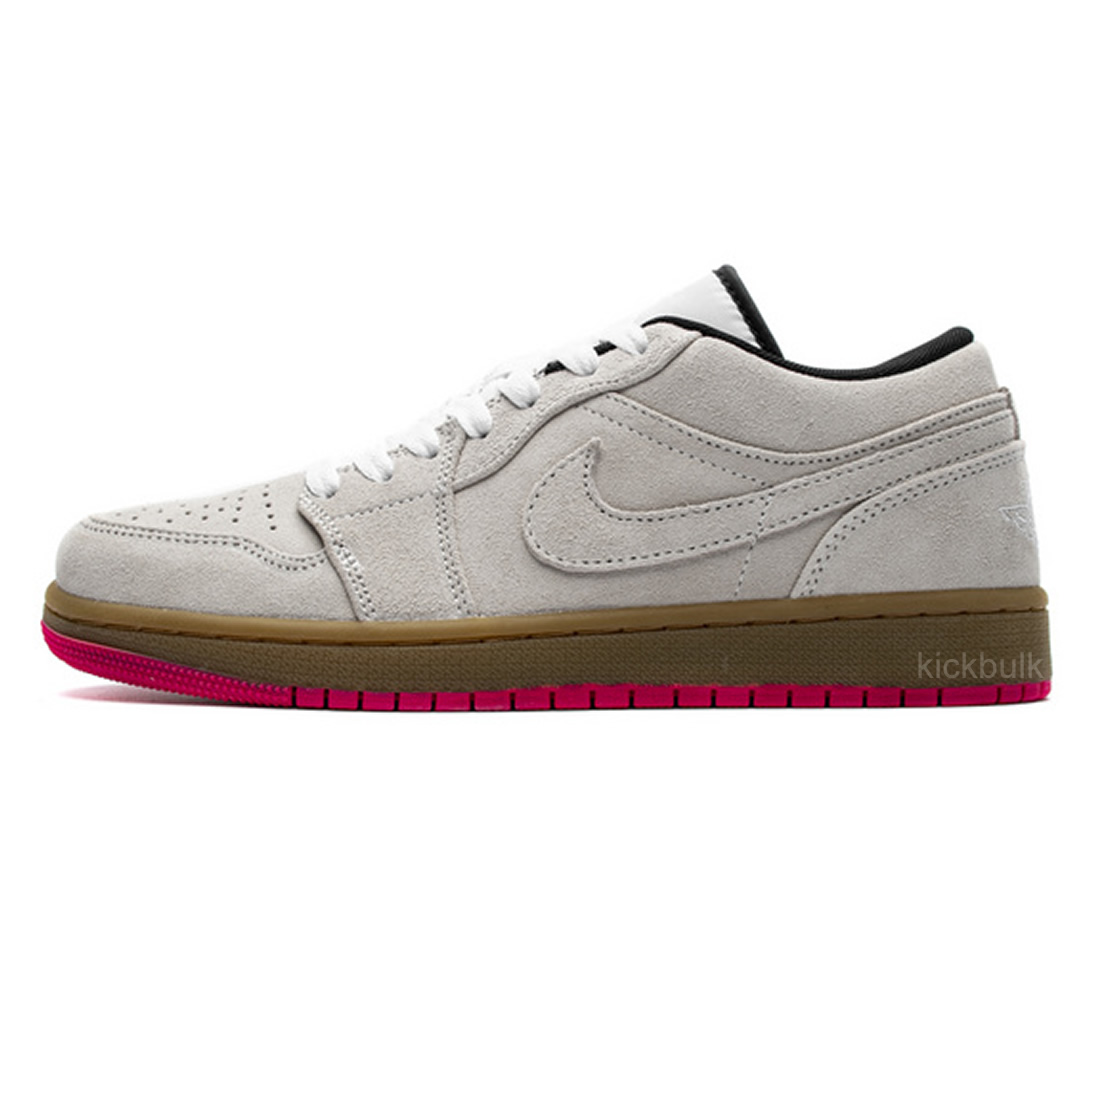 Nike Air Jordan 1 Low Hyper Pink 553558 119 1 - www.kickbulk.cc